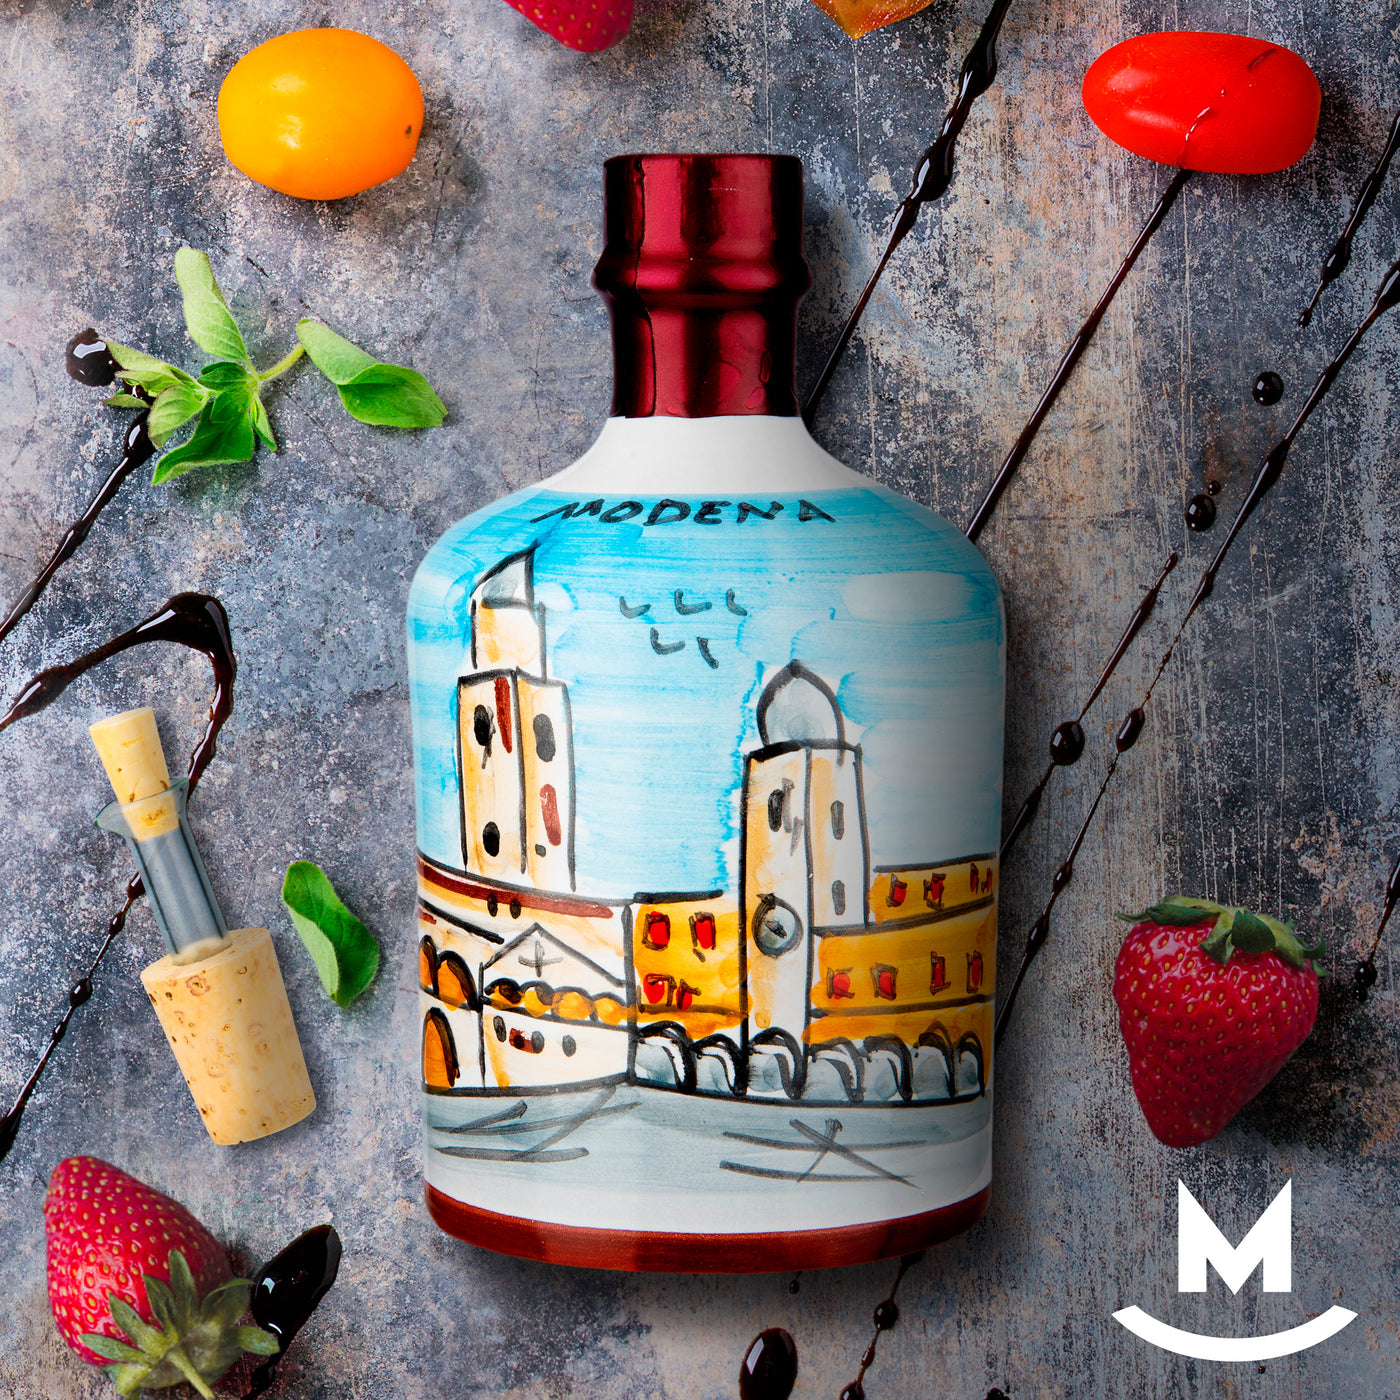 Dolceterra Balsamic Vinegar of Modena IGP Jar by Acetaia Malpighi